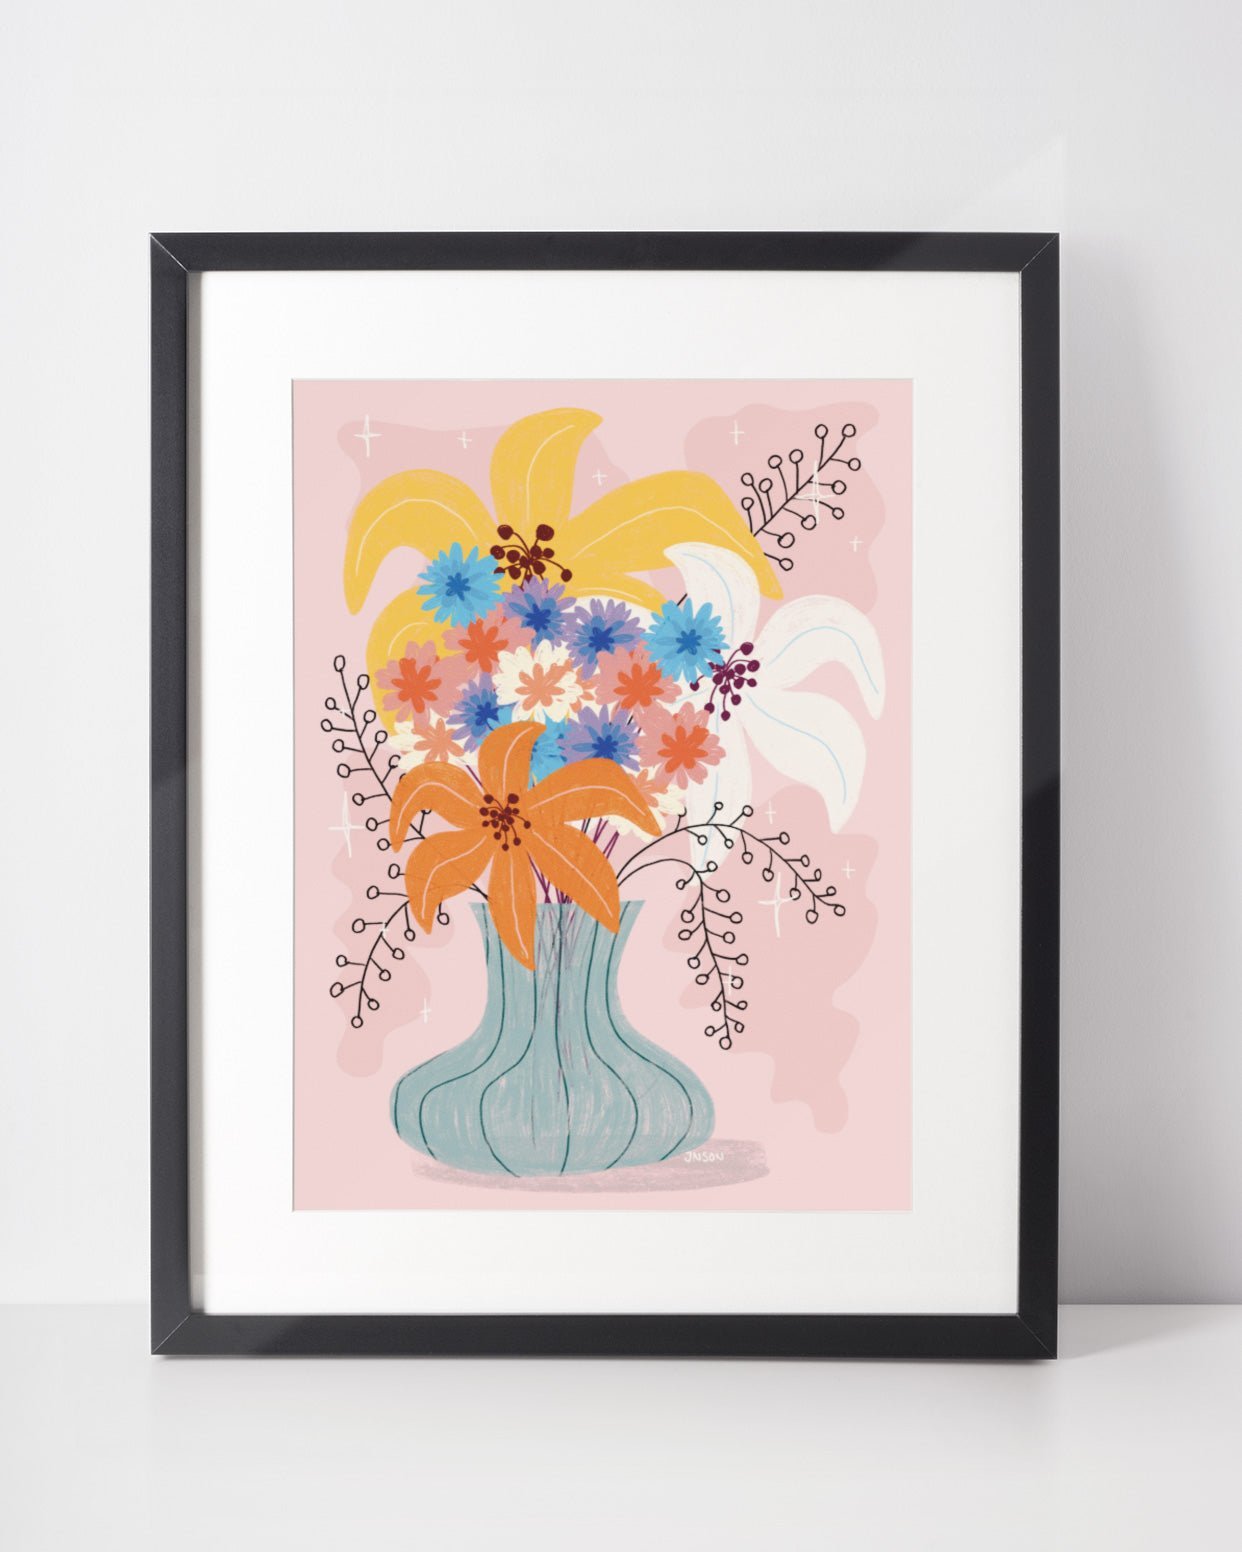 Flower Vase - Sofia Jnson - Usuals